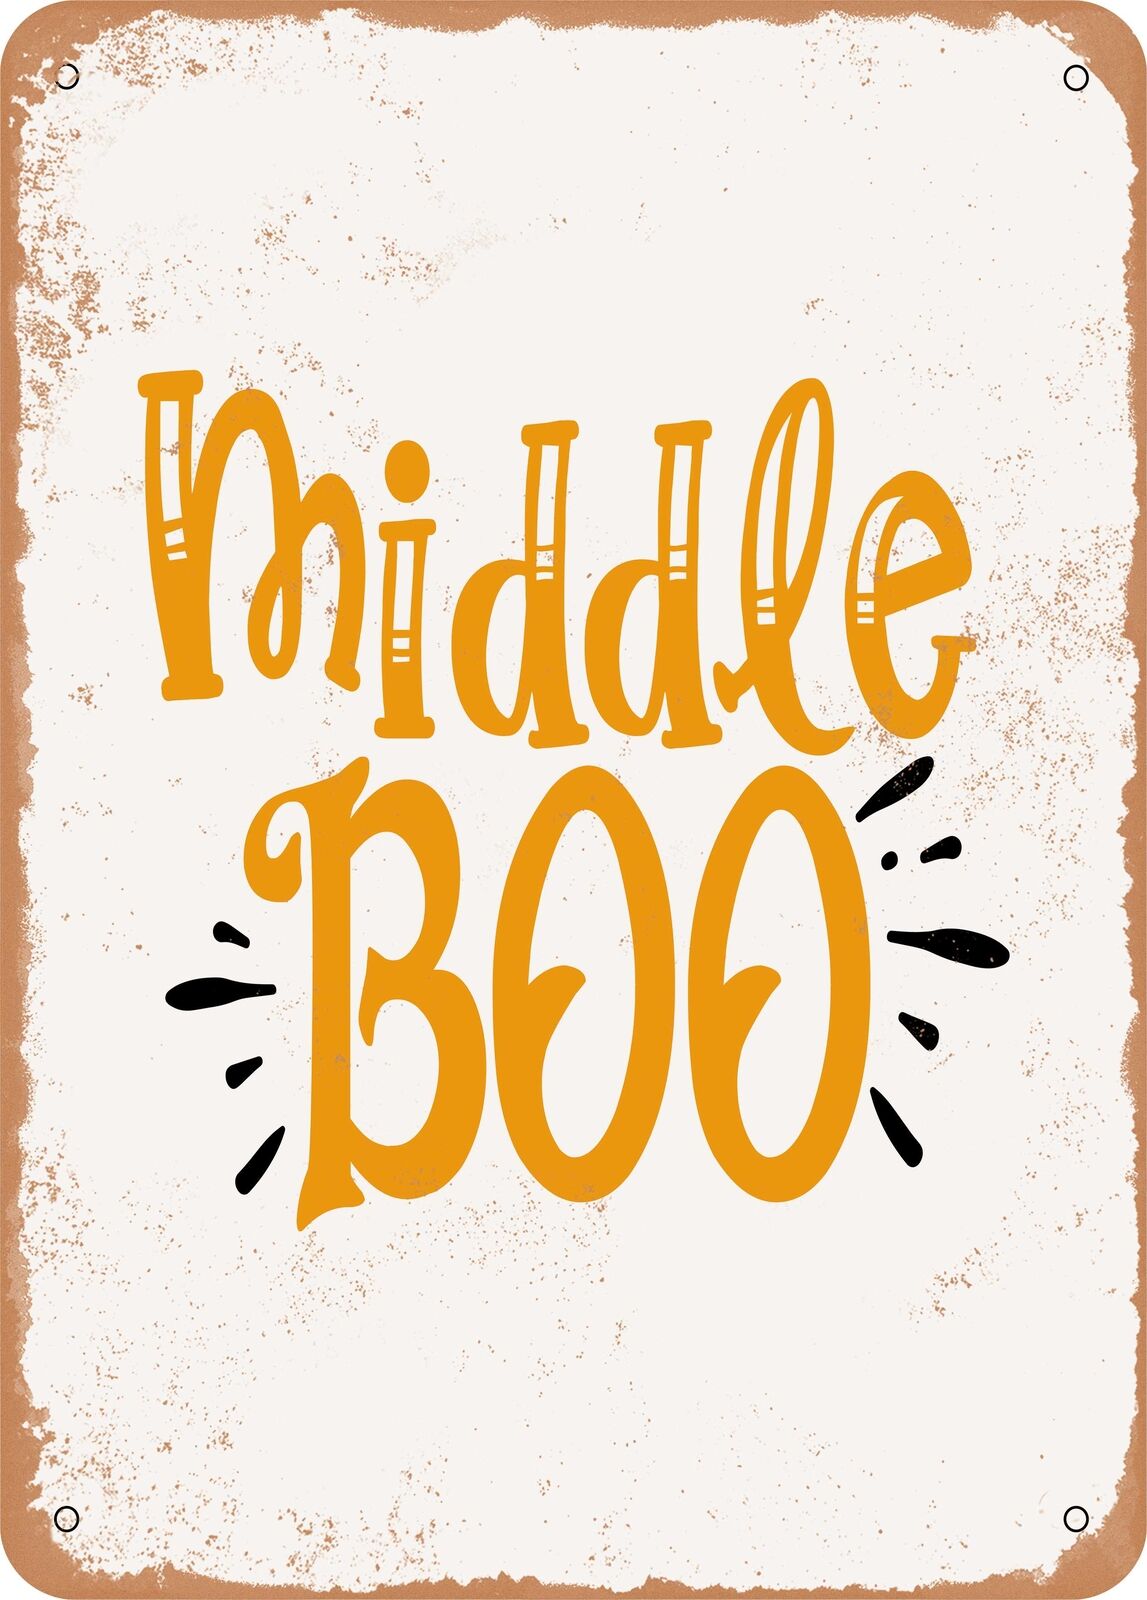 Metal Sign - Middle Boo - Vintage Look